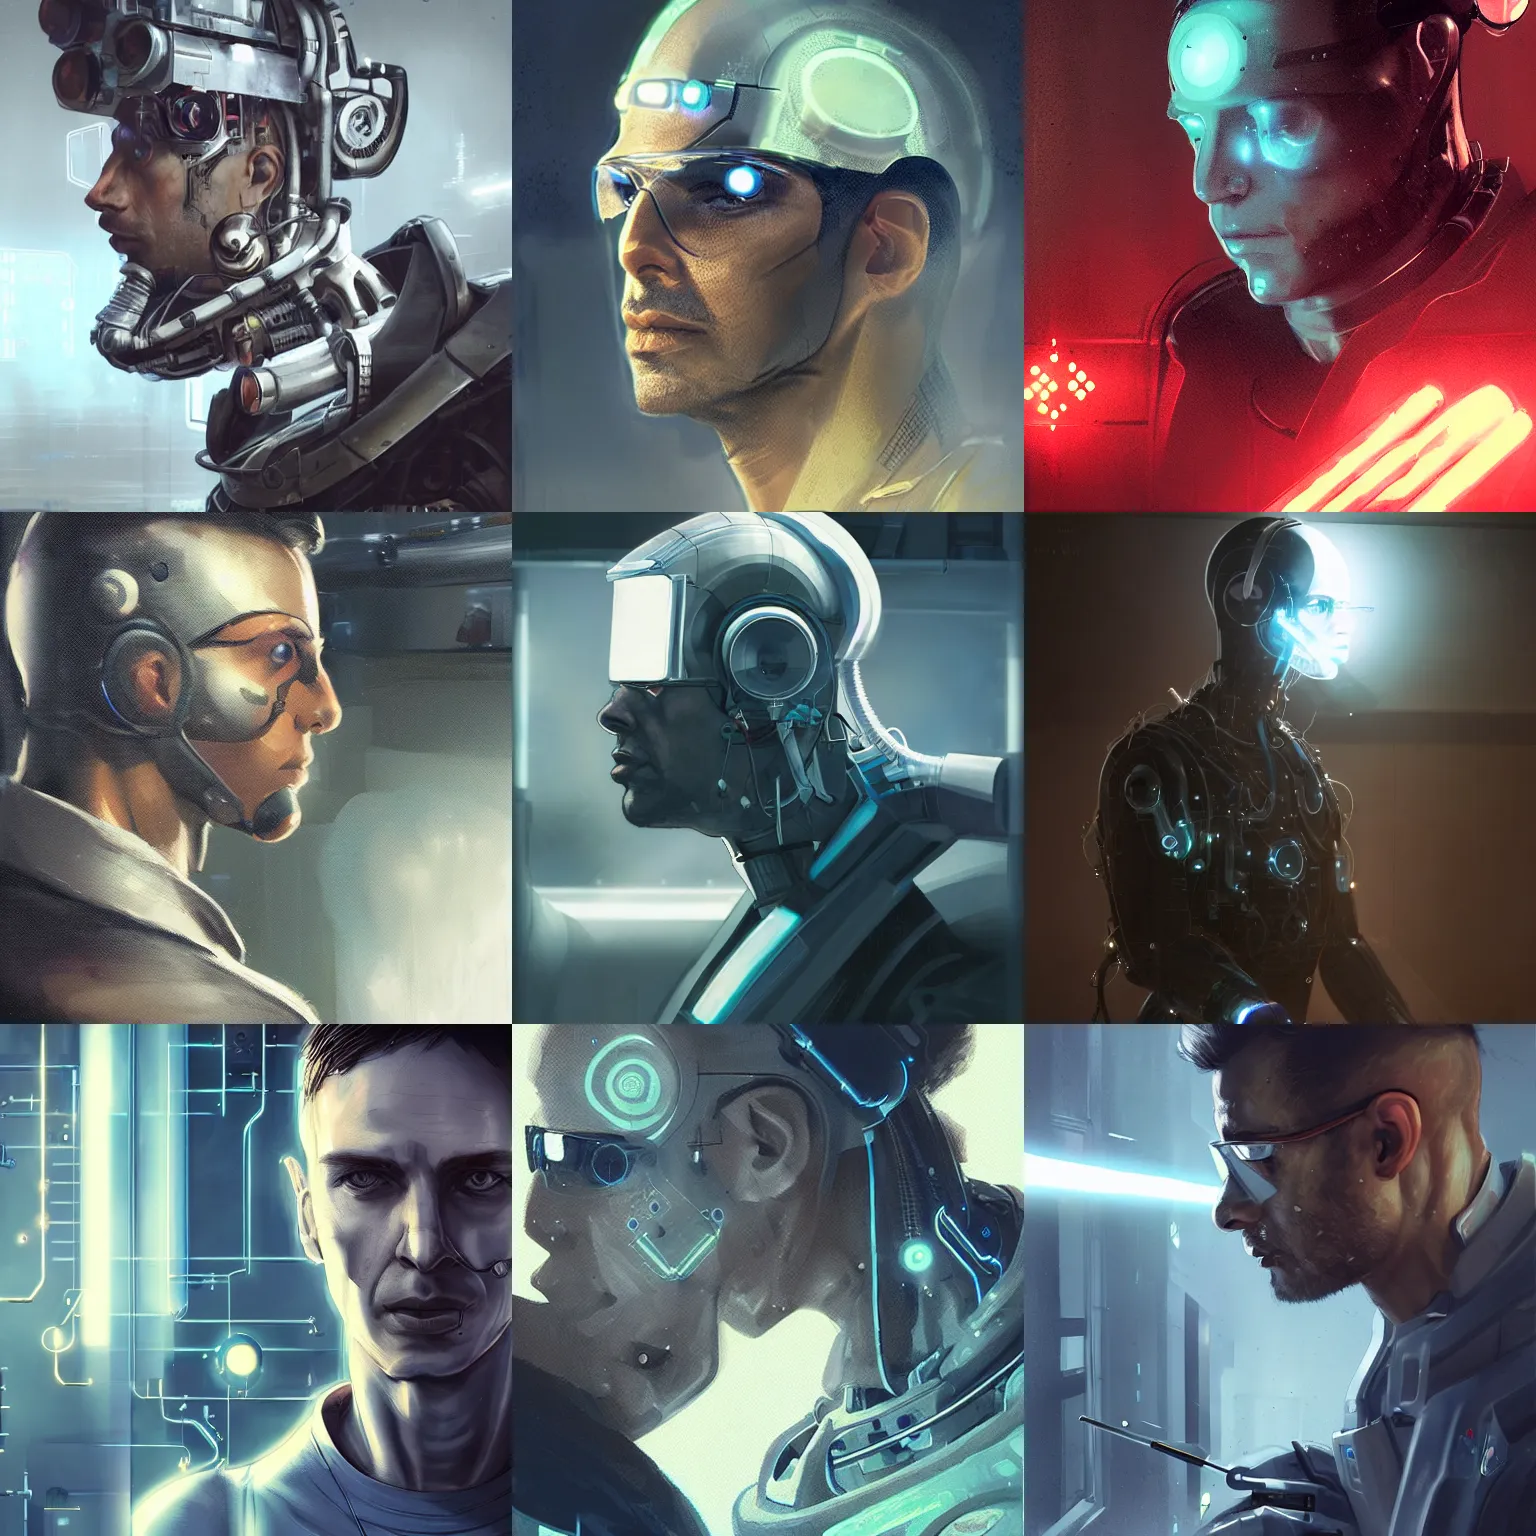 Prompt: a laboratory operator man with cybernetic enhancements, scifi character portrait by greg rutkowski, daytoner, cinematic lighting, dystopian scifi gear, profile picture, cyborg